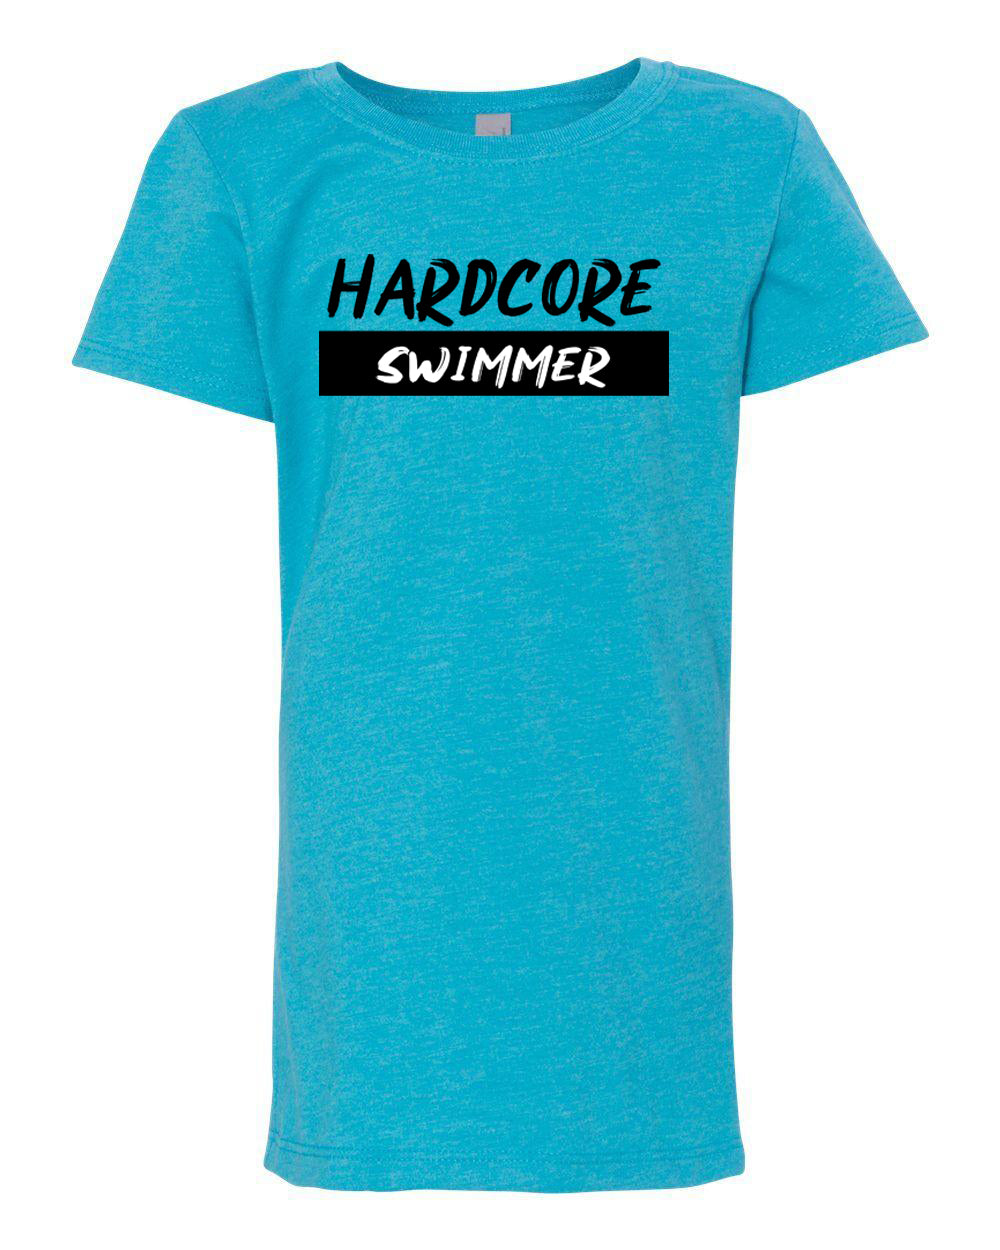 Hardcore Swimmer Girls T-Shirt